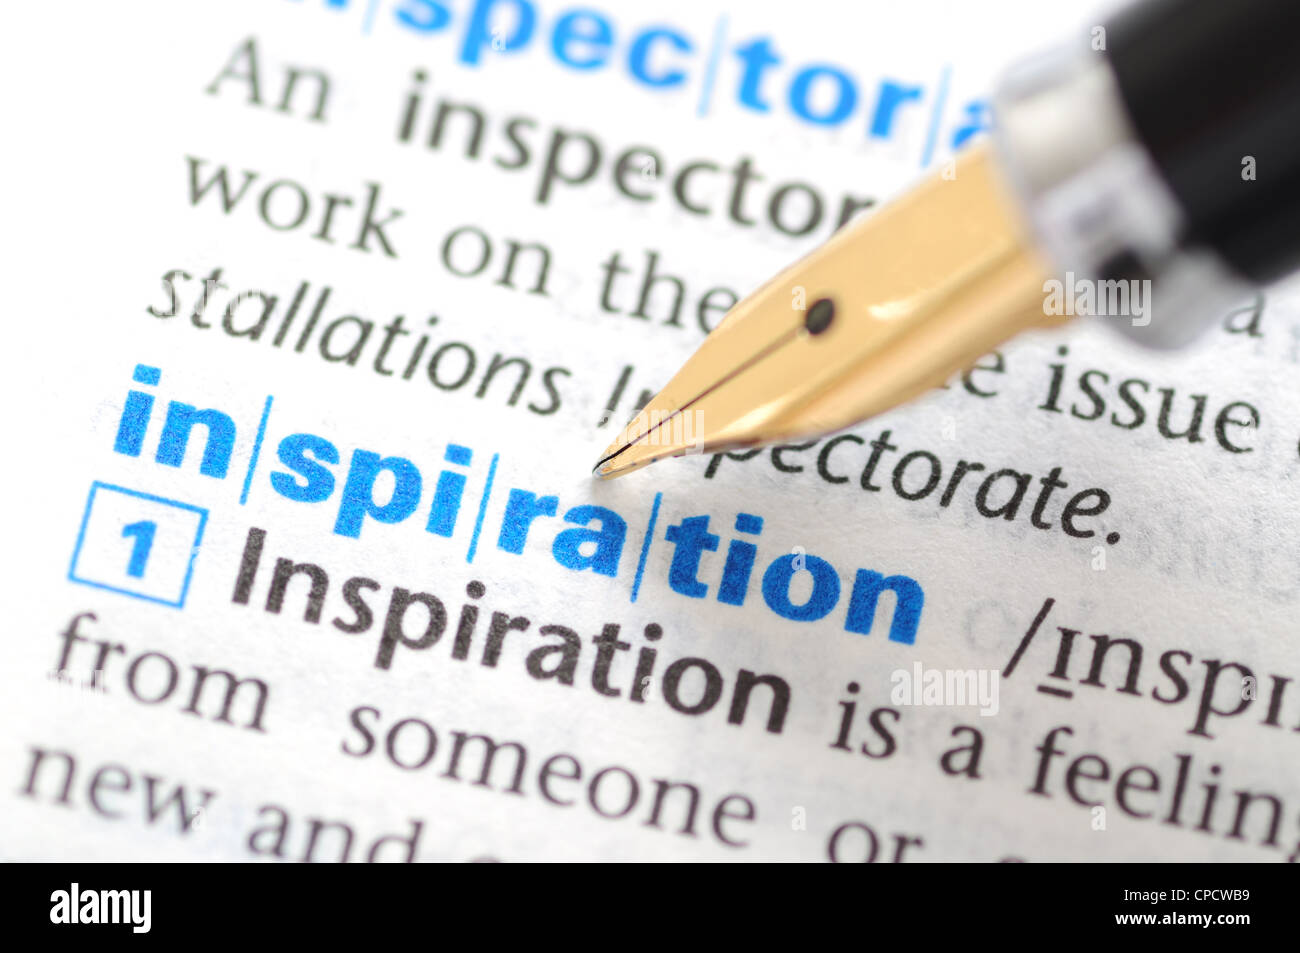 Inspiration - Dictionary Series Stock Photo